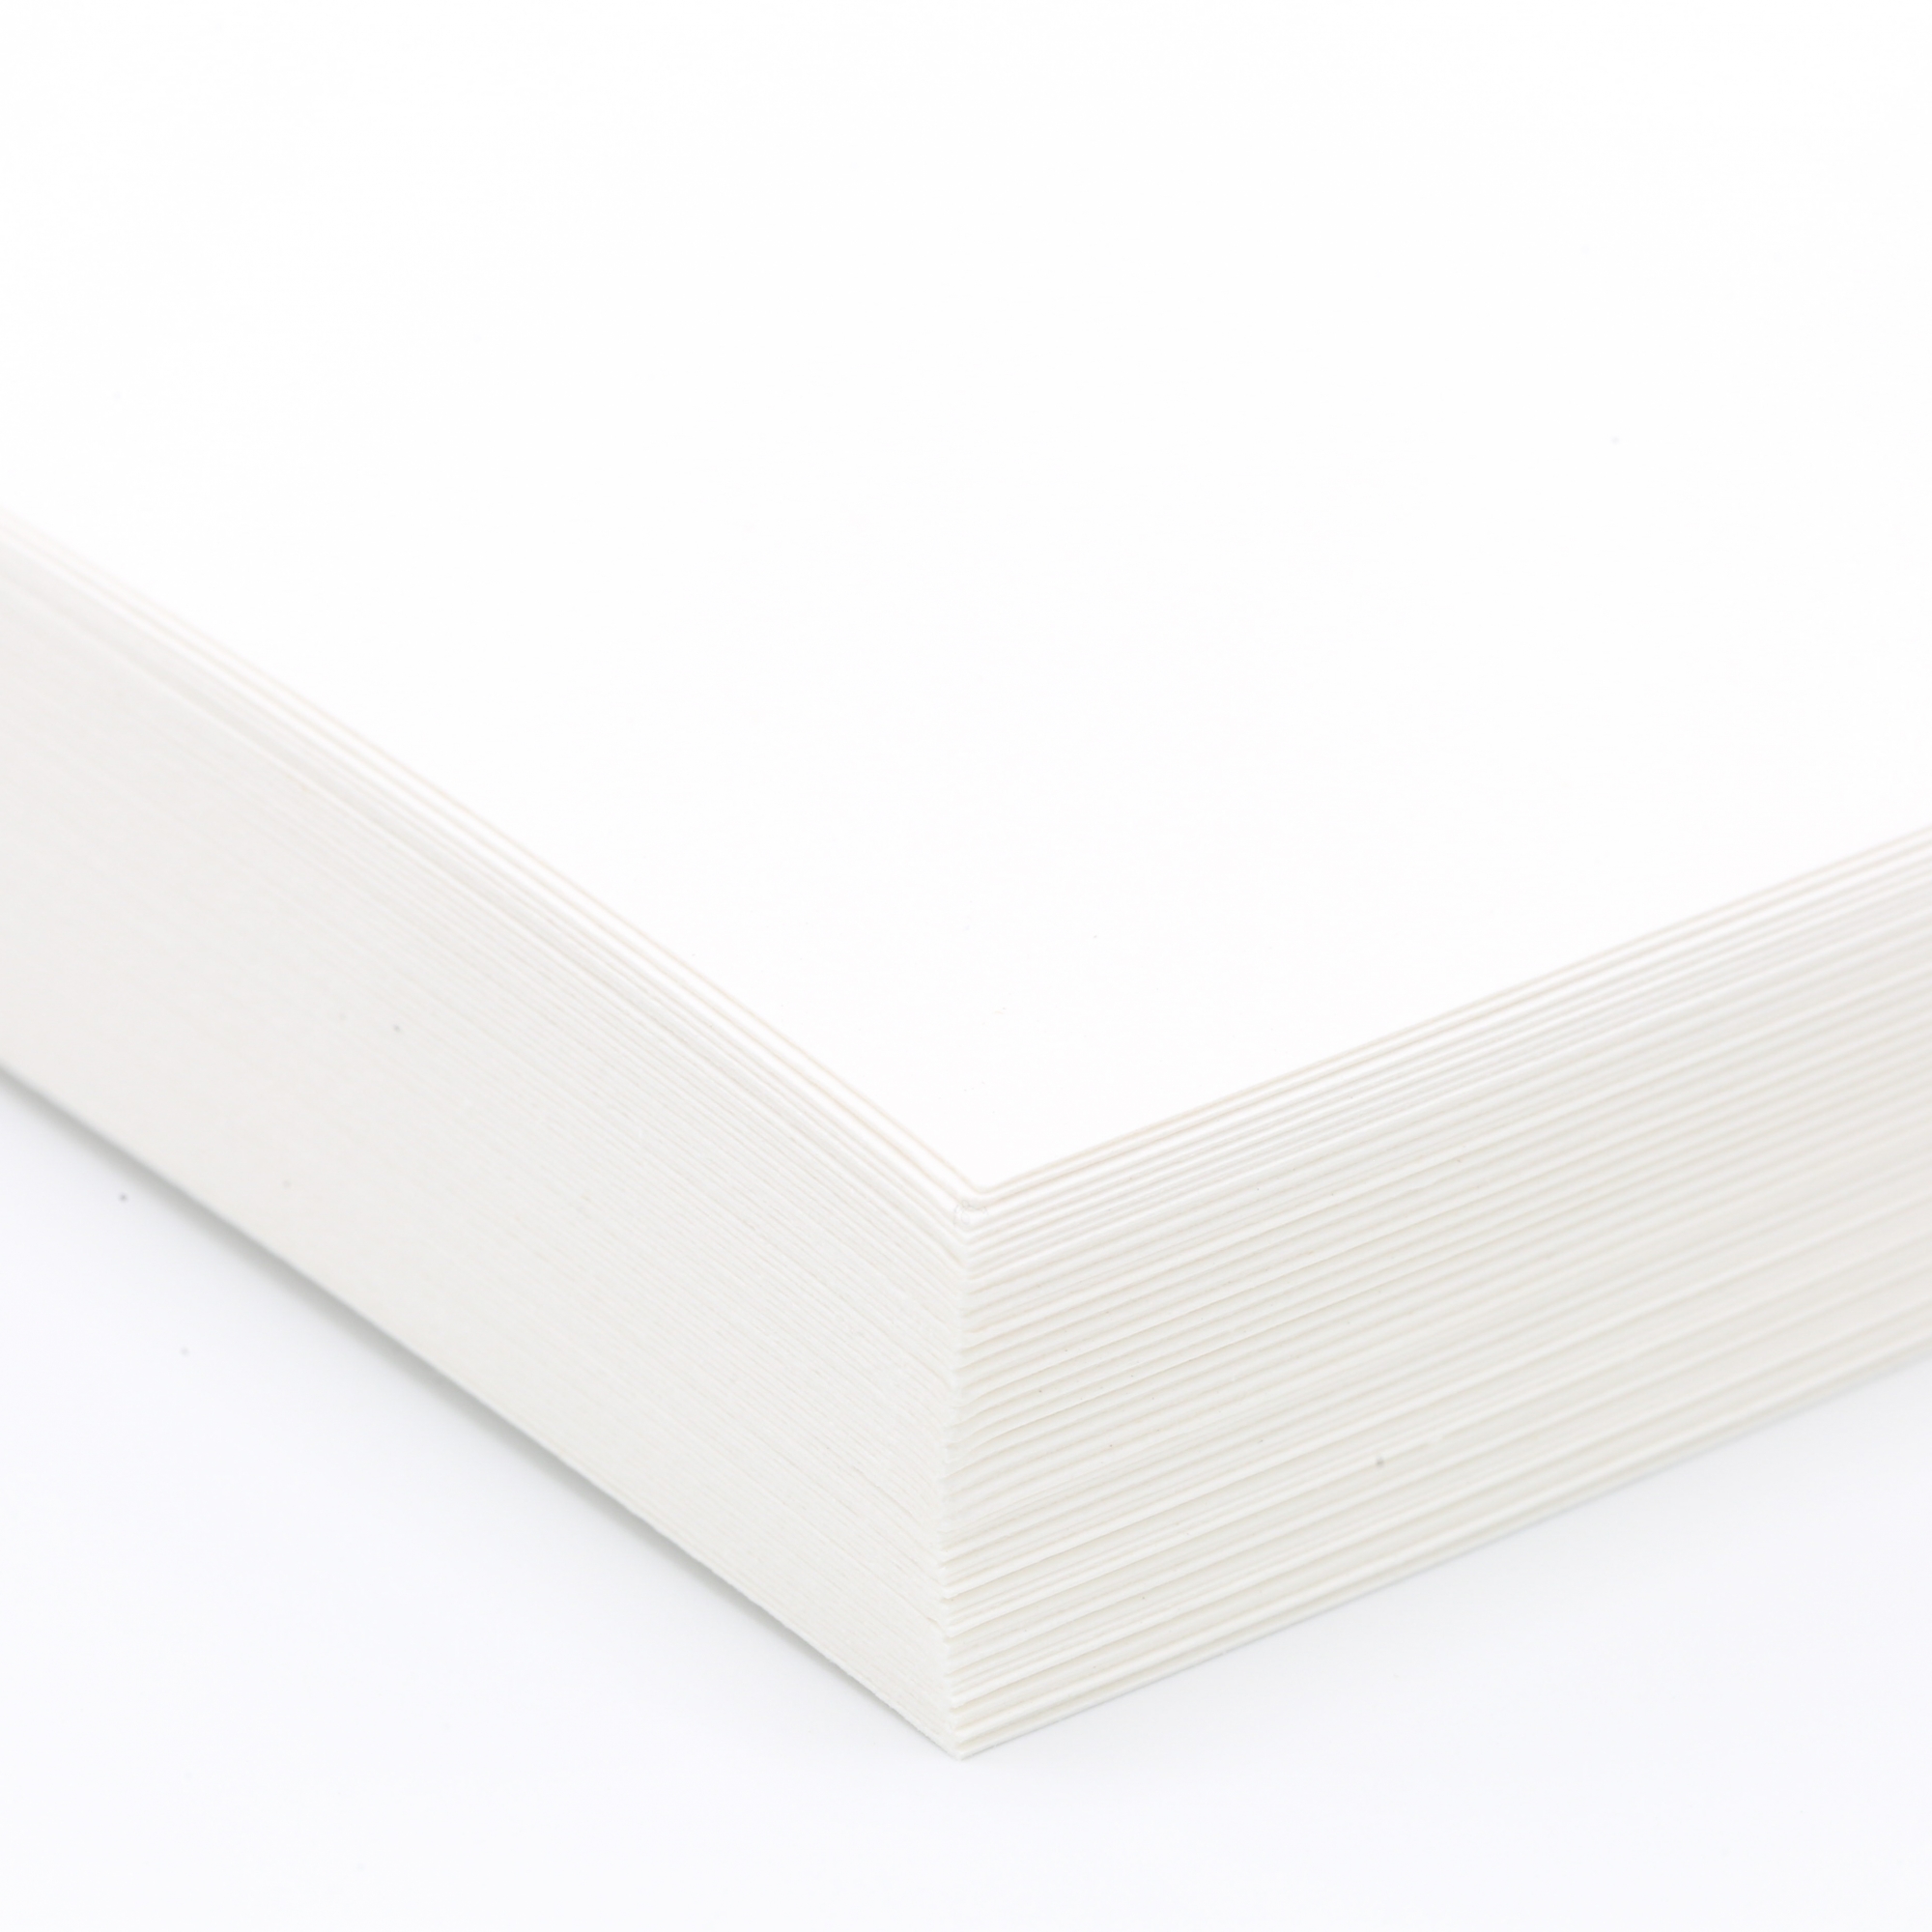 Classic CREST Heavy 130lb SOLAR WHITE Card Stock 8.5x11 25 Sheets